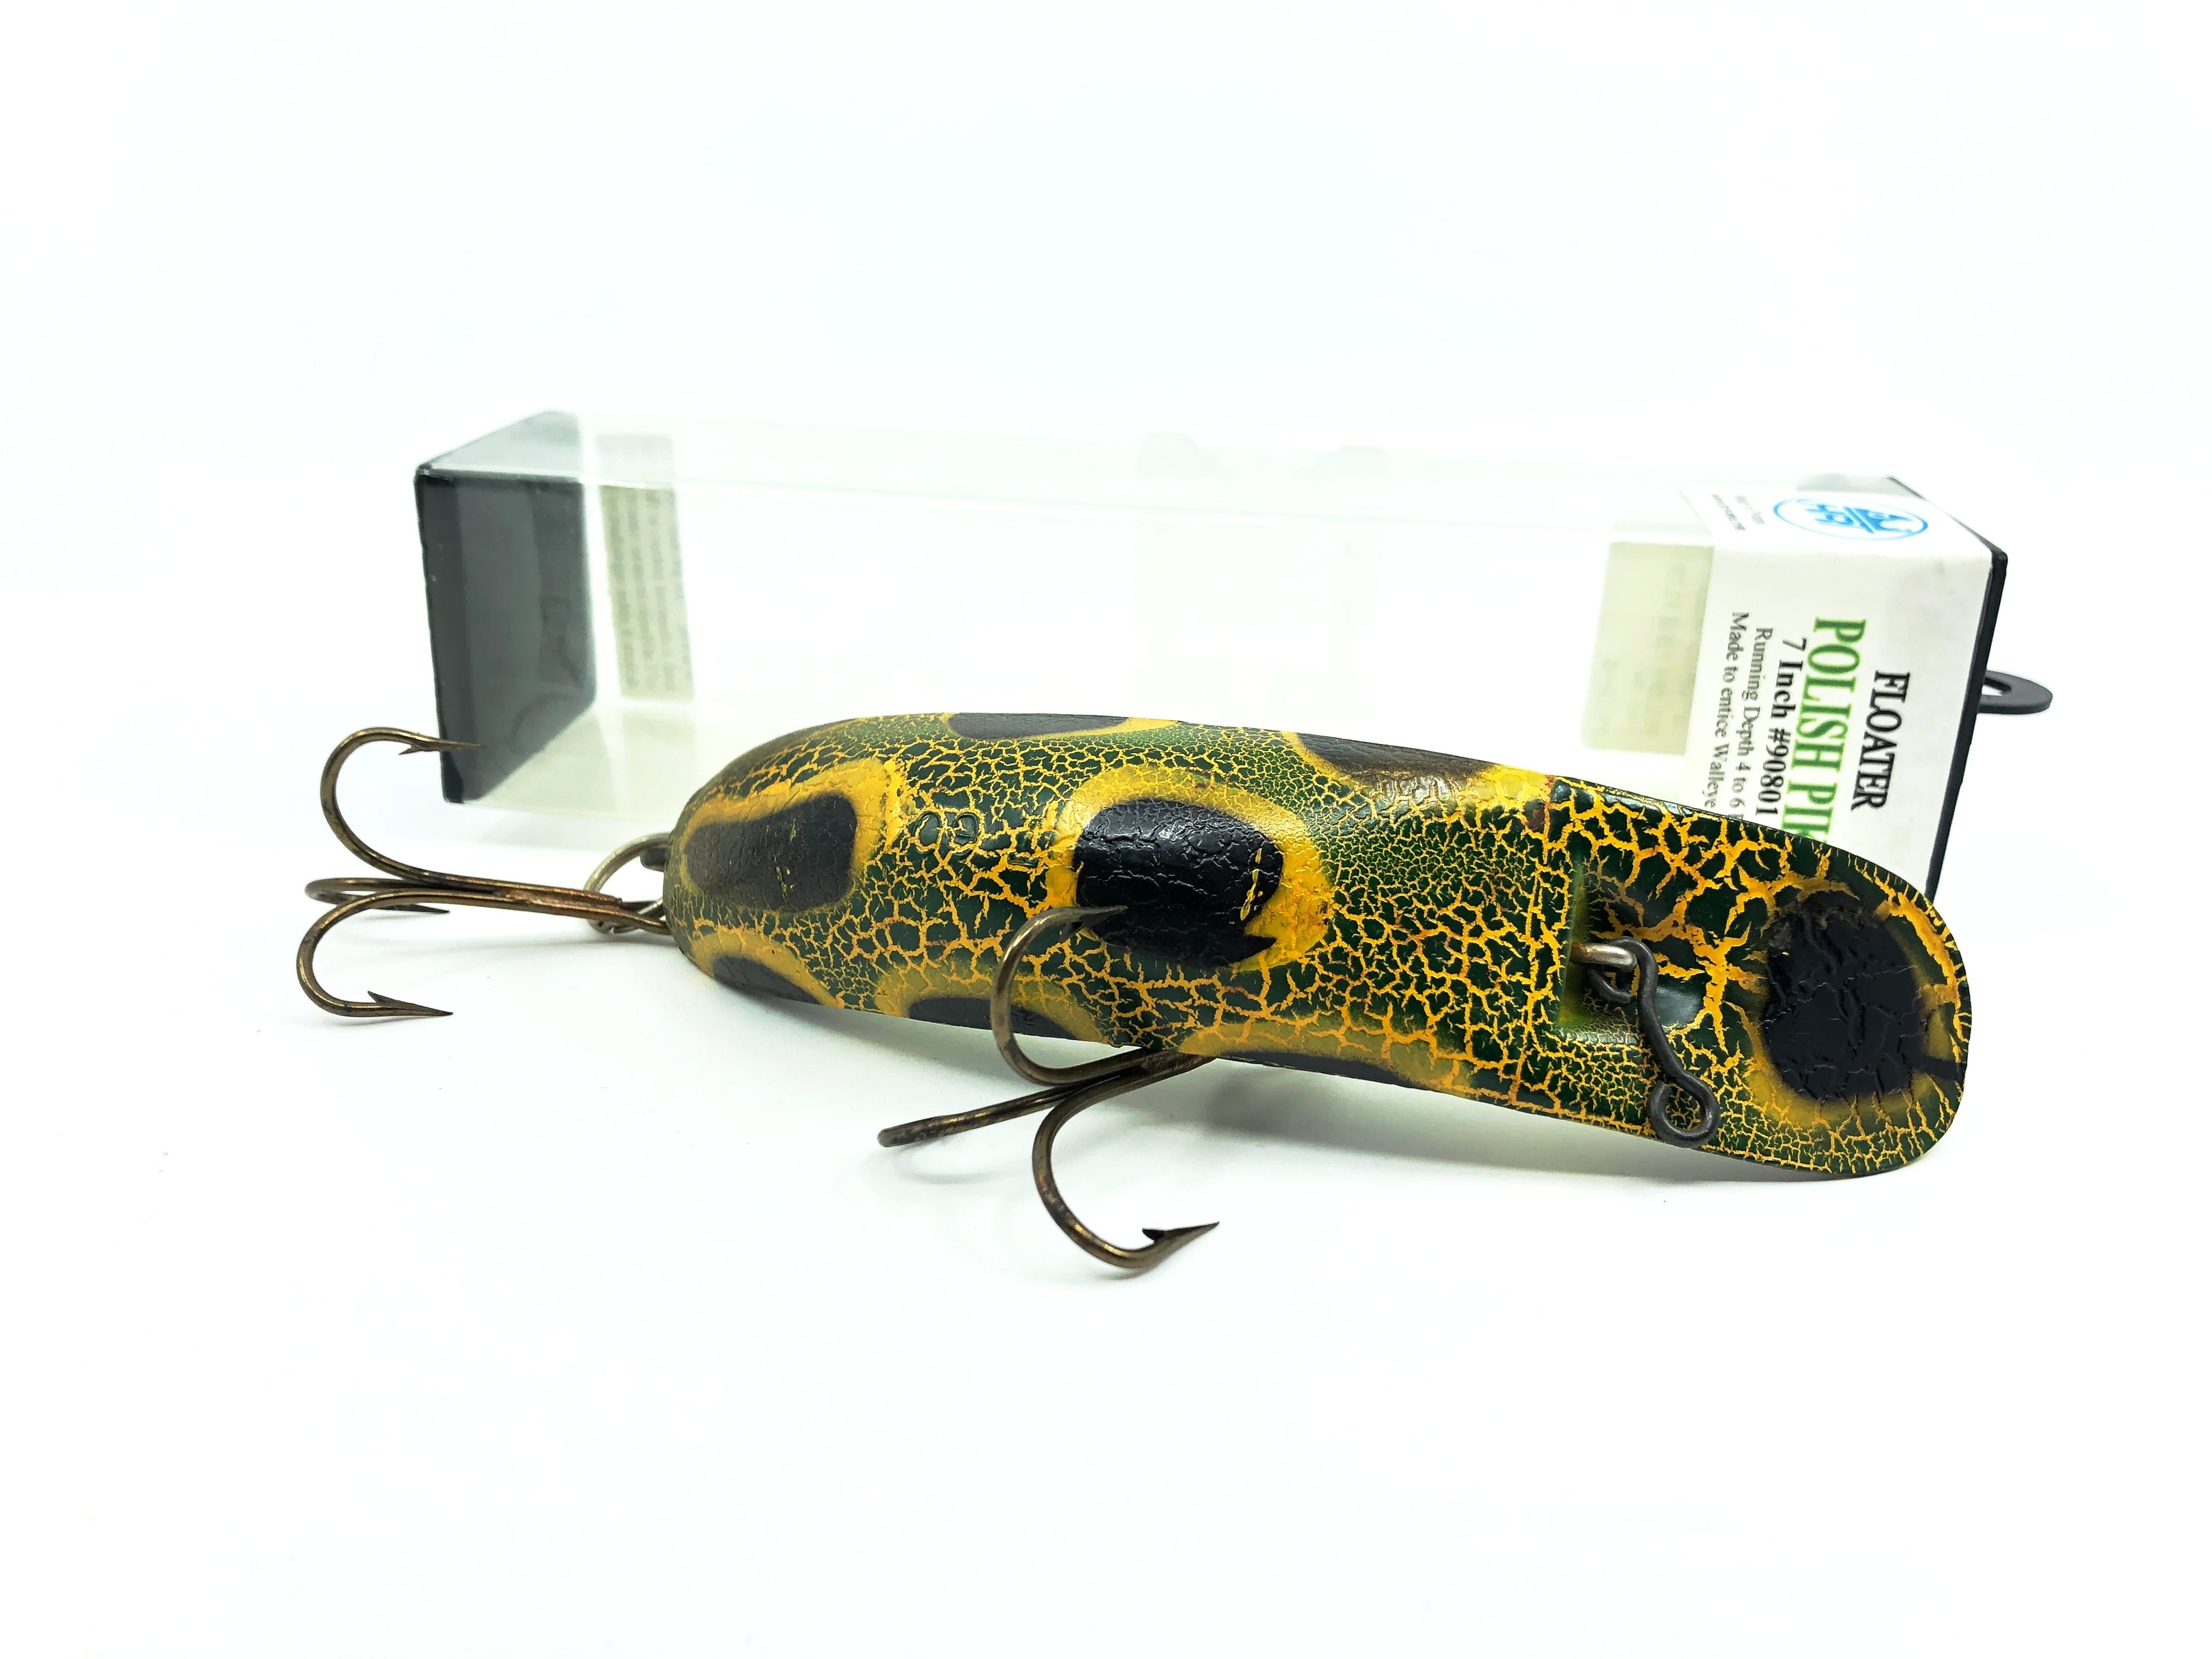 Helin T60 Flatfish Musky Lure, Frog Spot Color with Box – My Bait Shop, LLC